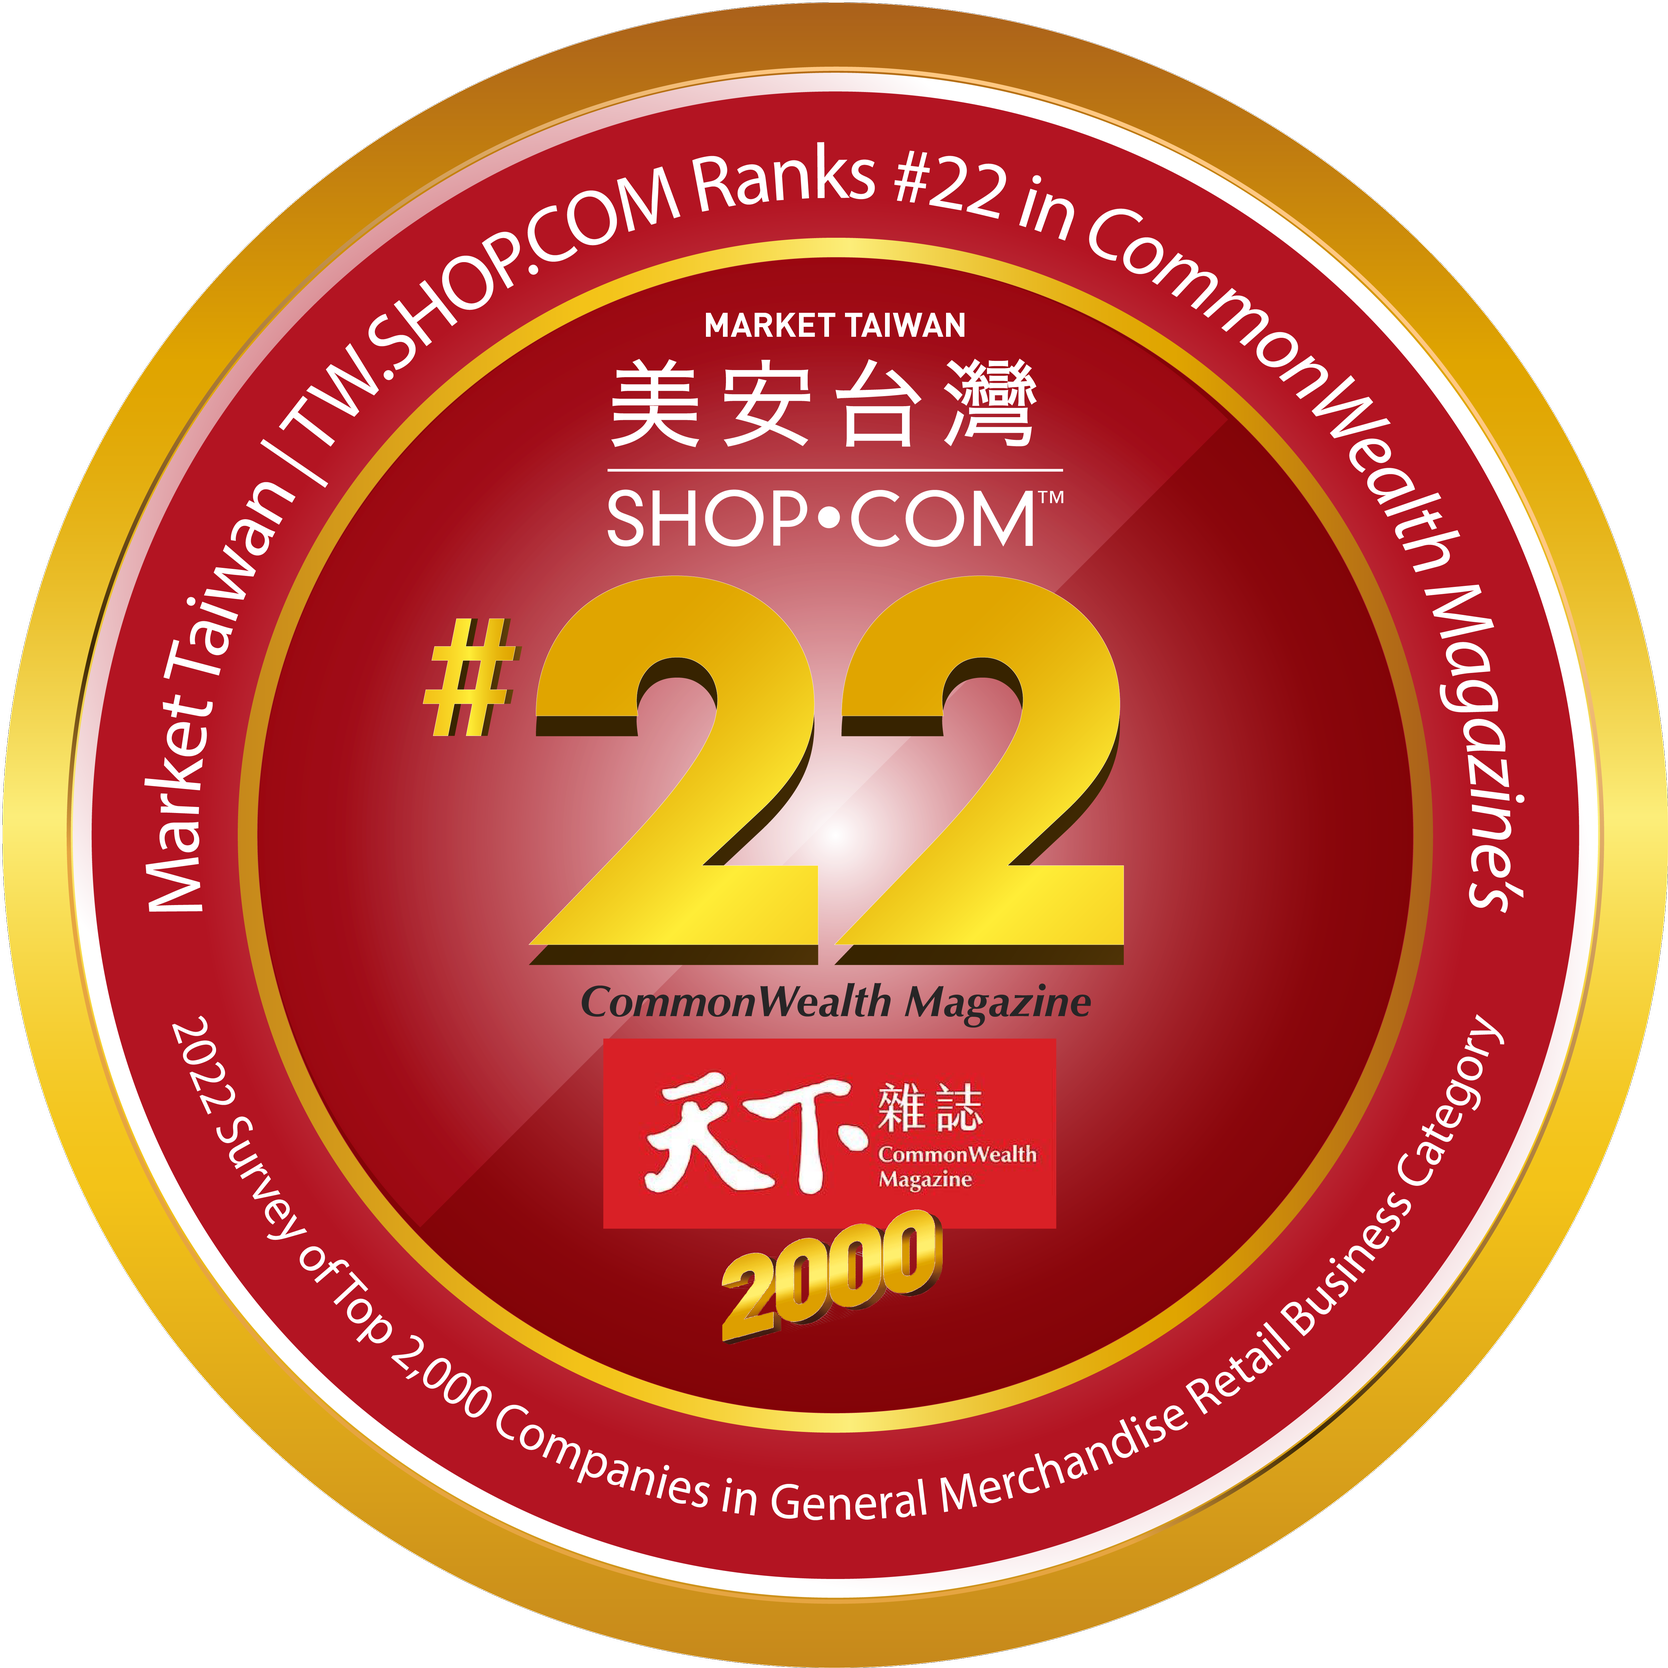 Market Taiwan Rank #22 in CommonWealth Magazine's 2022 Survey of Top 2,000 Companies